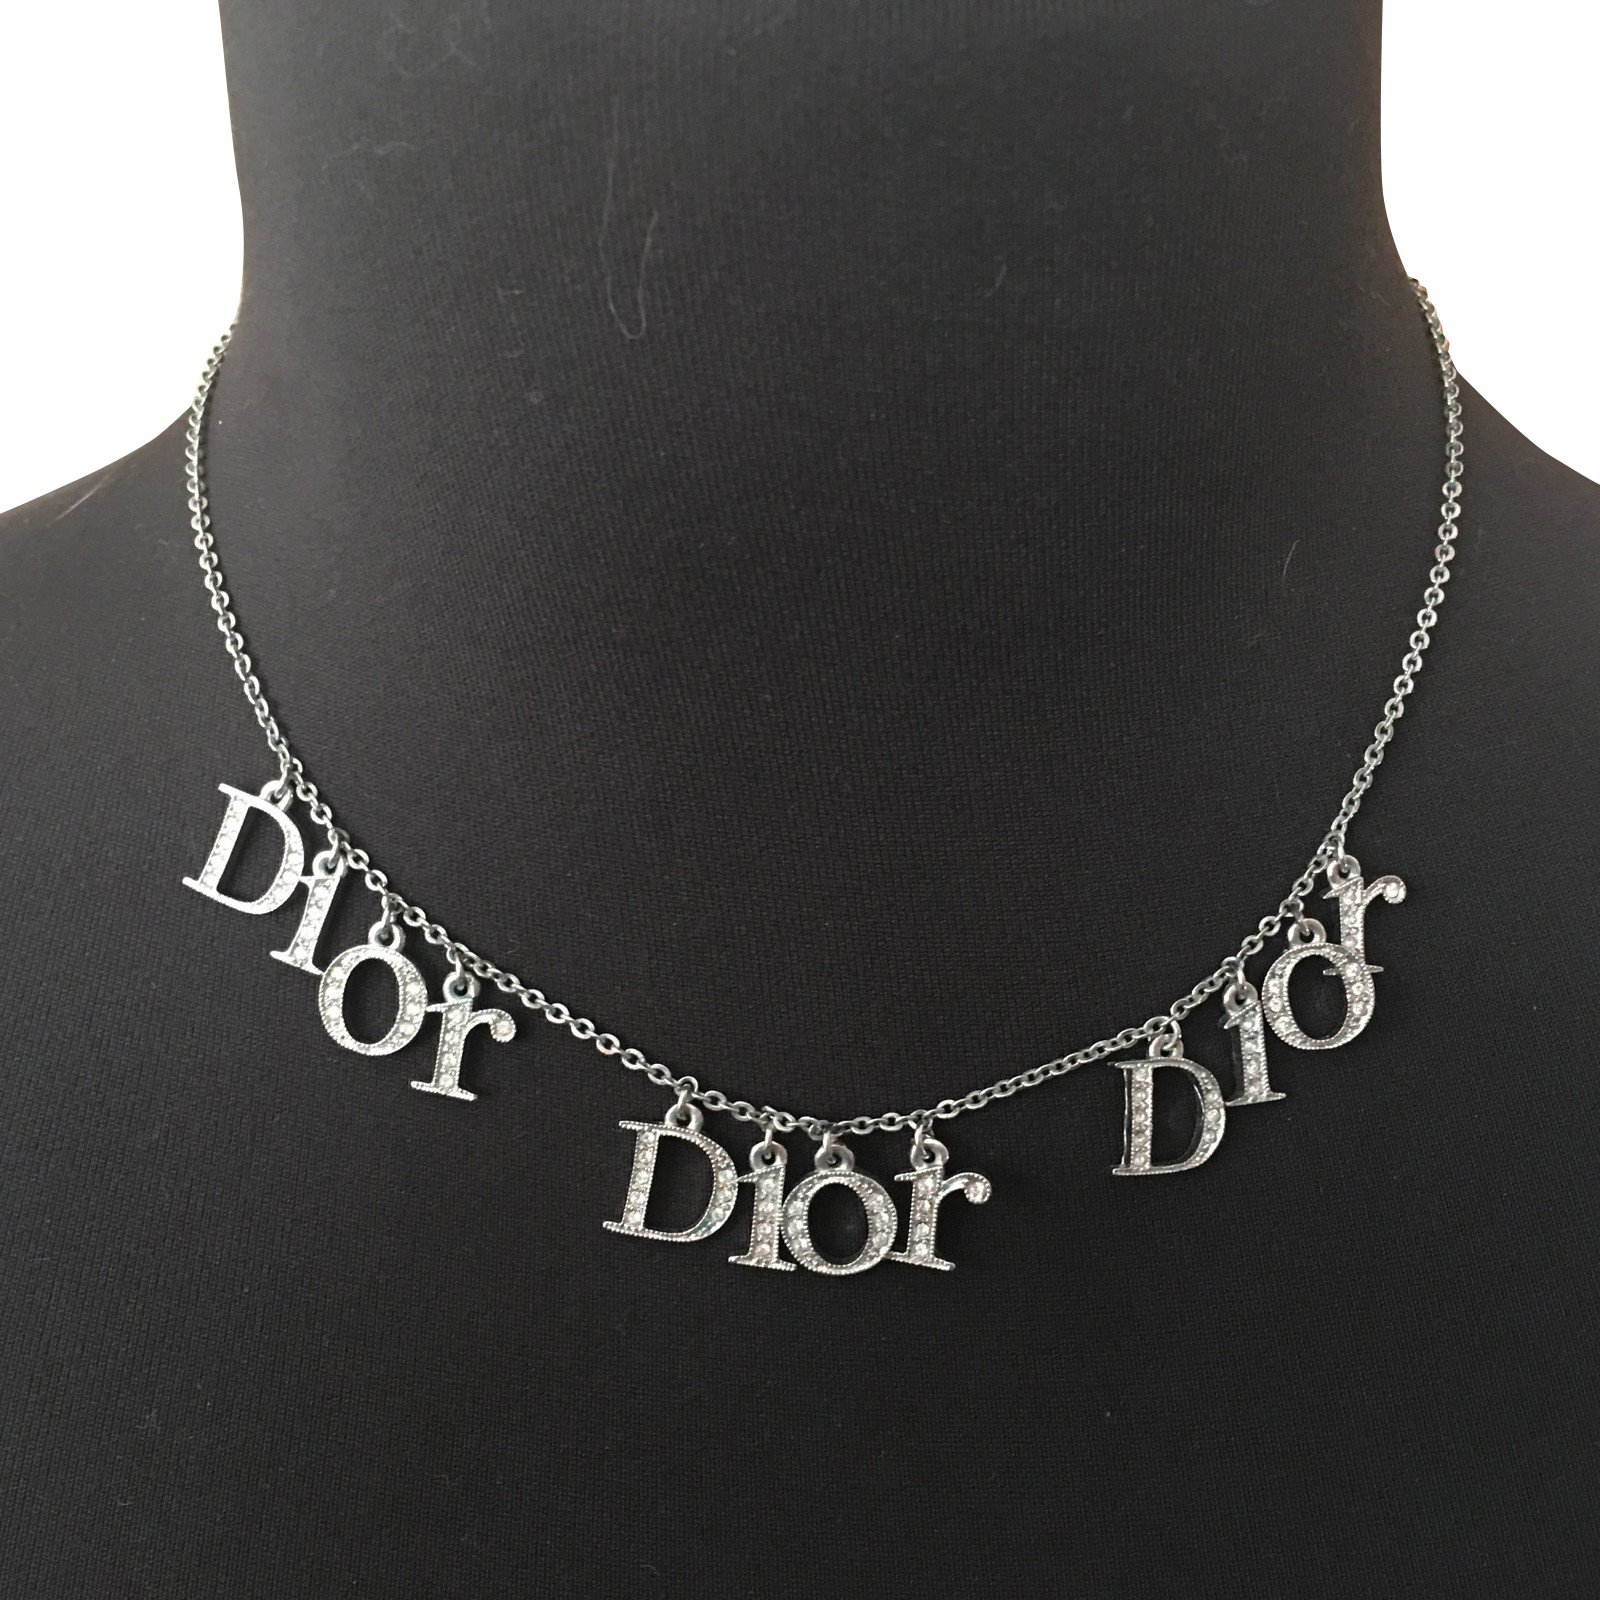 christian dior logo necklace